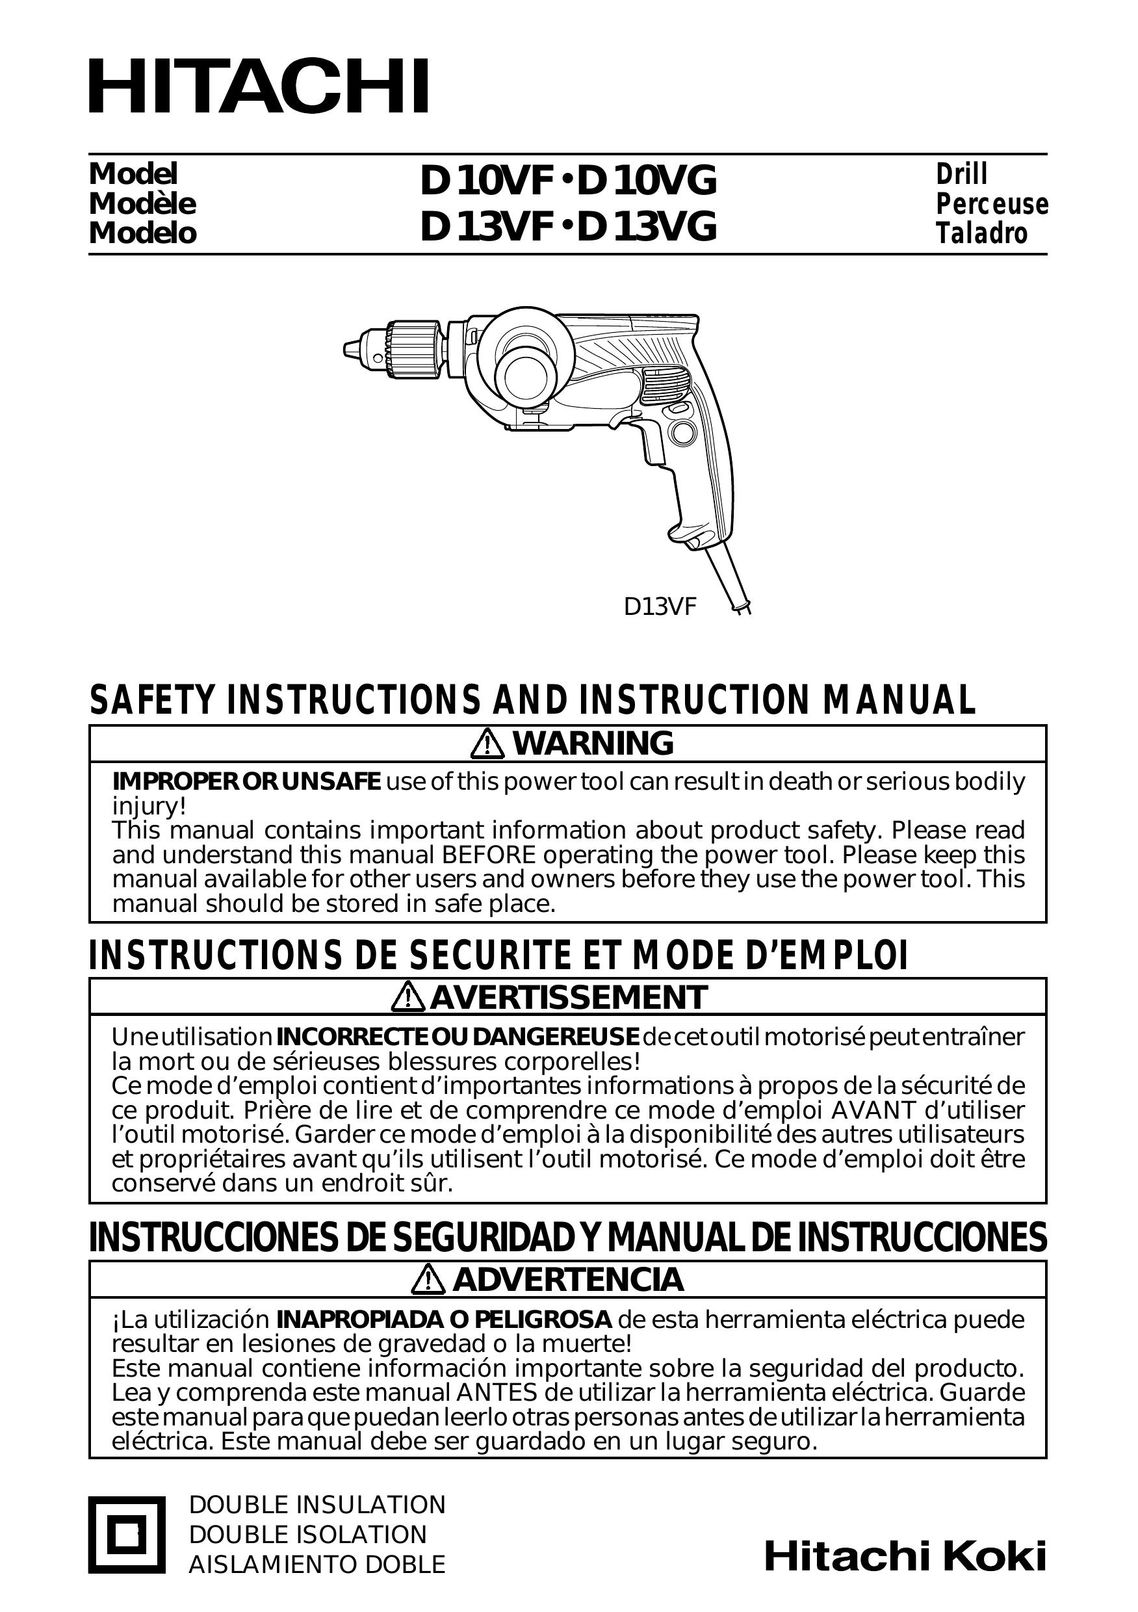 Hitachi D10VG Cordless Drill User Manual